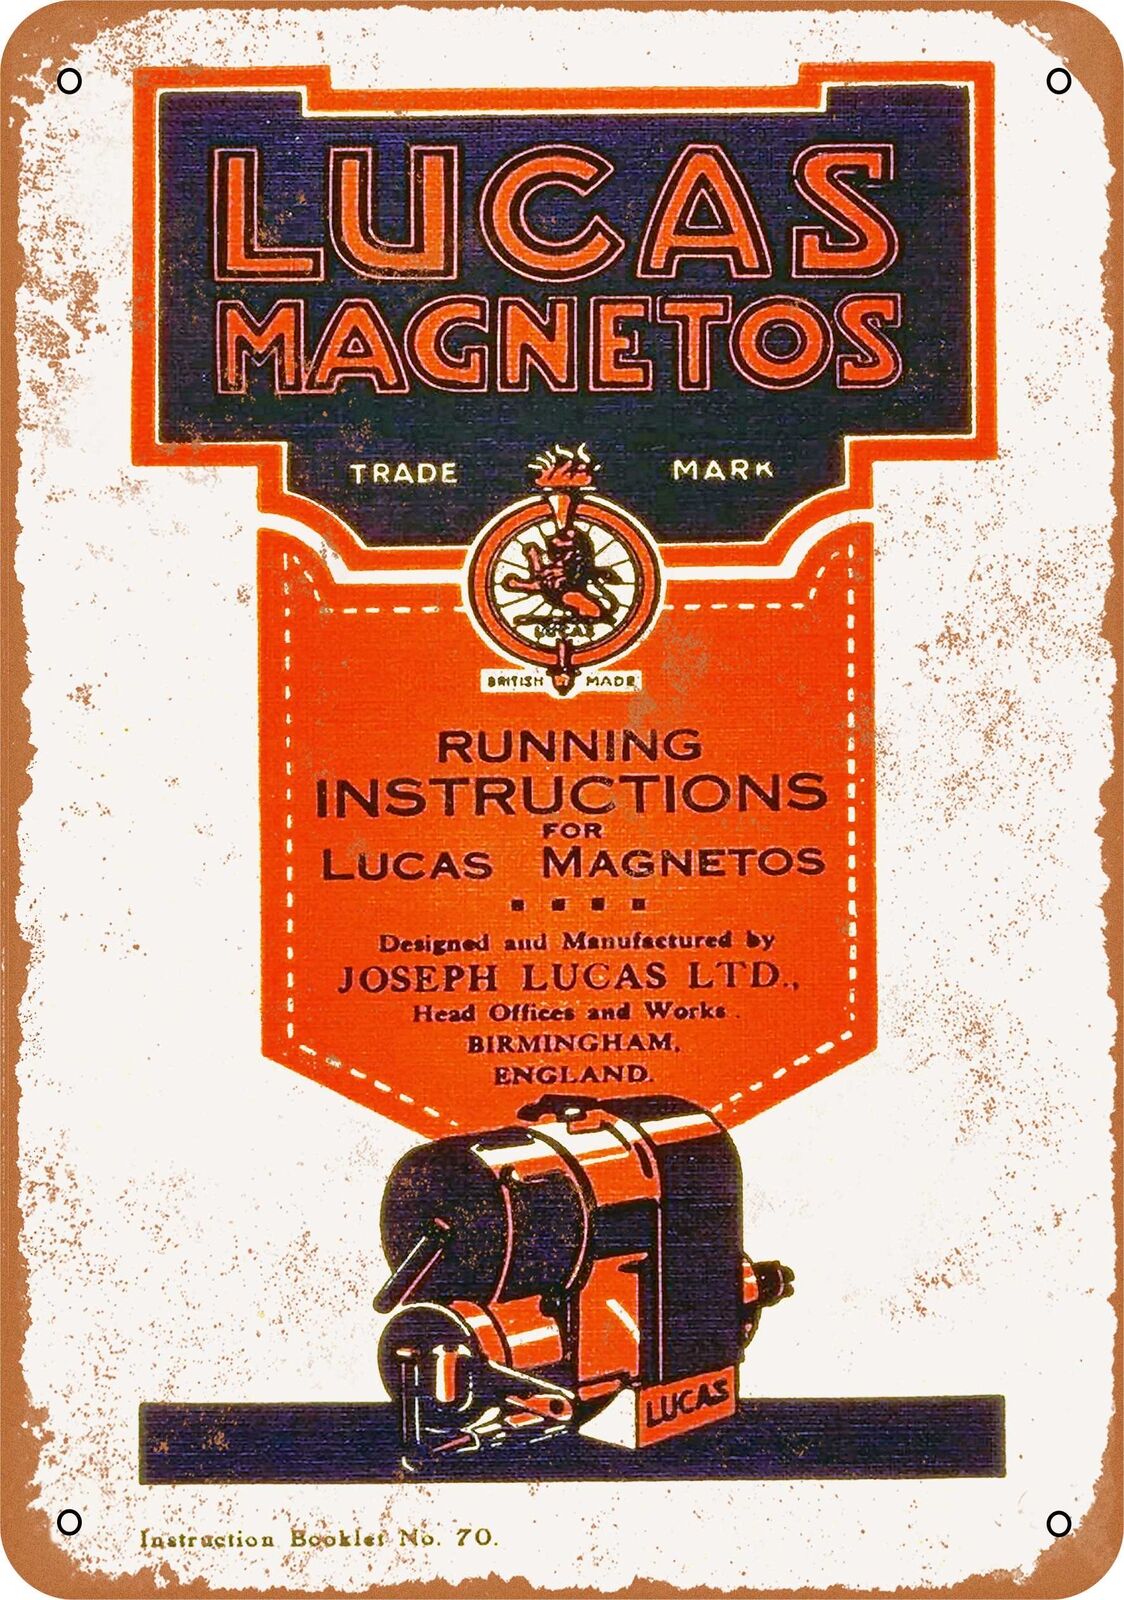 Metal Sign - 1913 Lucas Magnetos - Vintage Look Reproduction